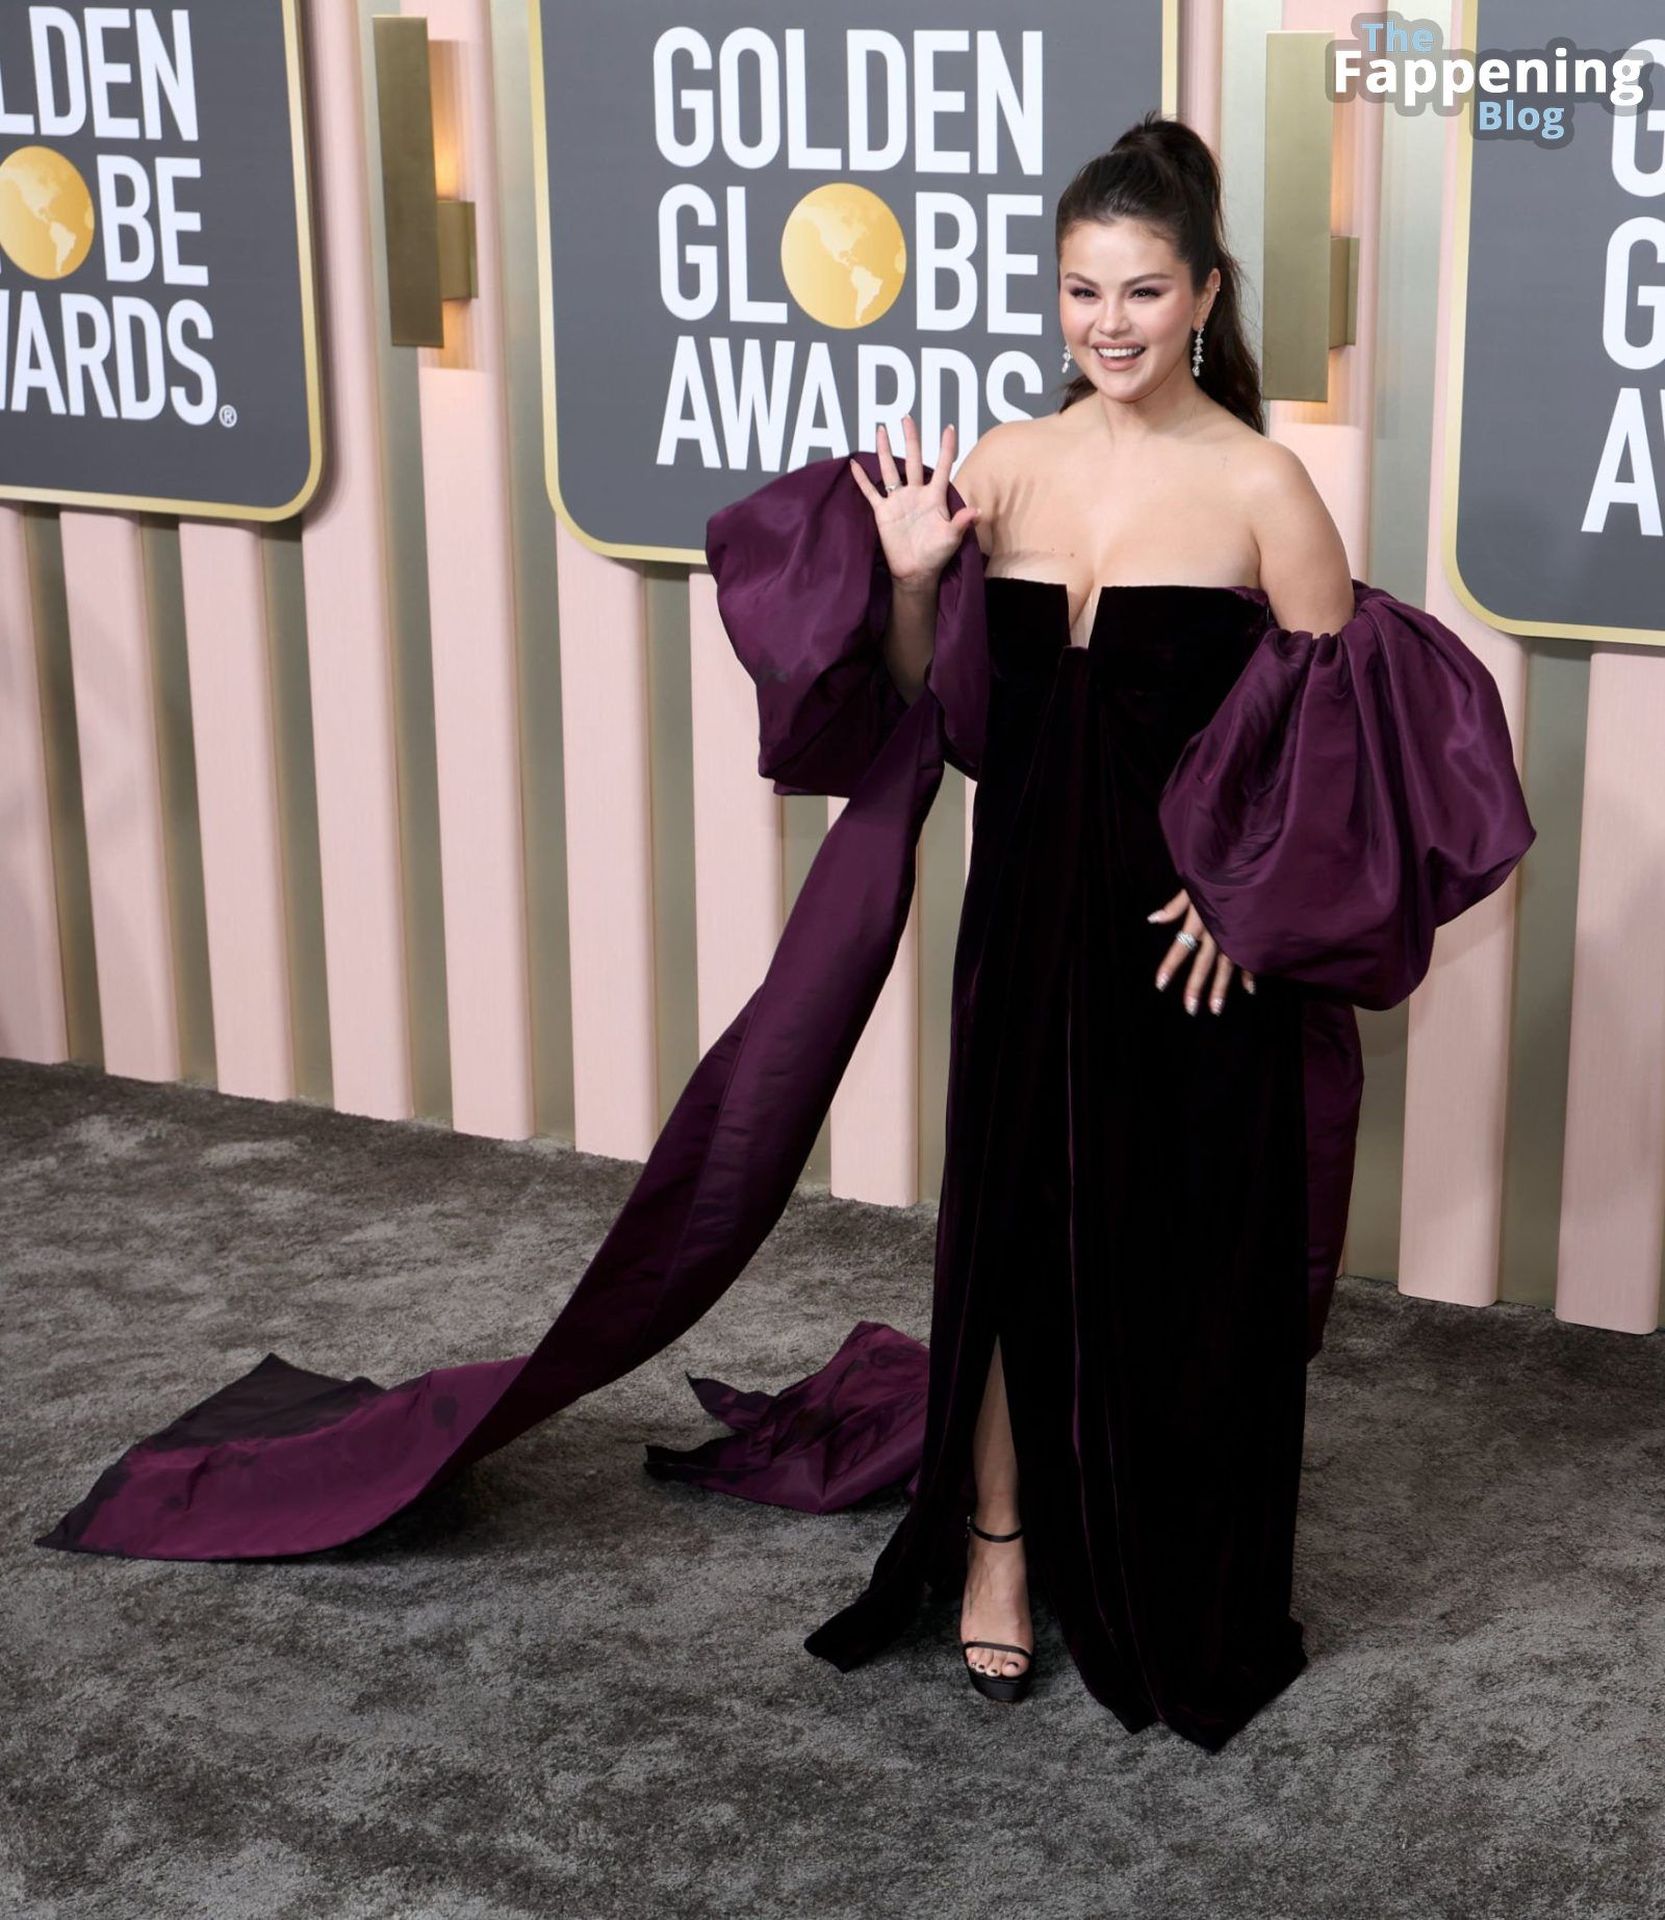 Selena-Gomez-Sexy-The-Fappening-Blog-33.jpg